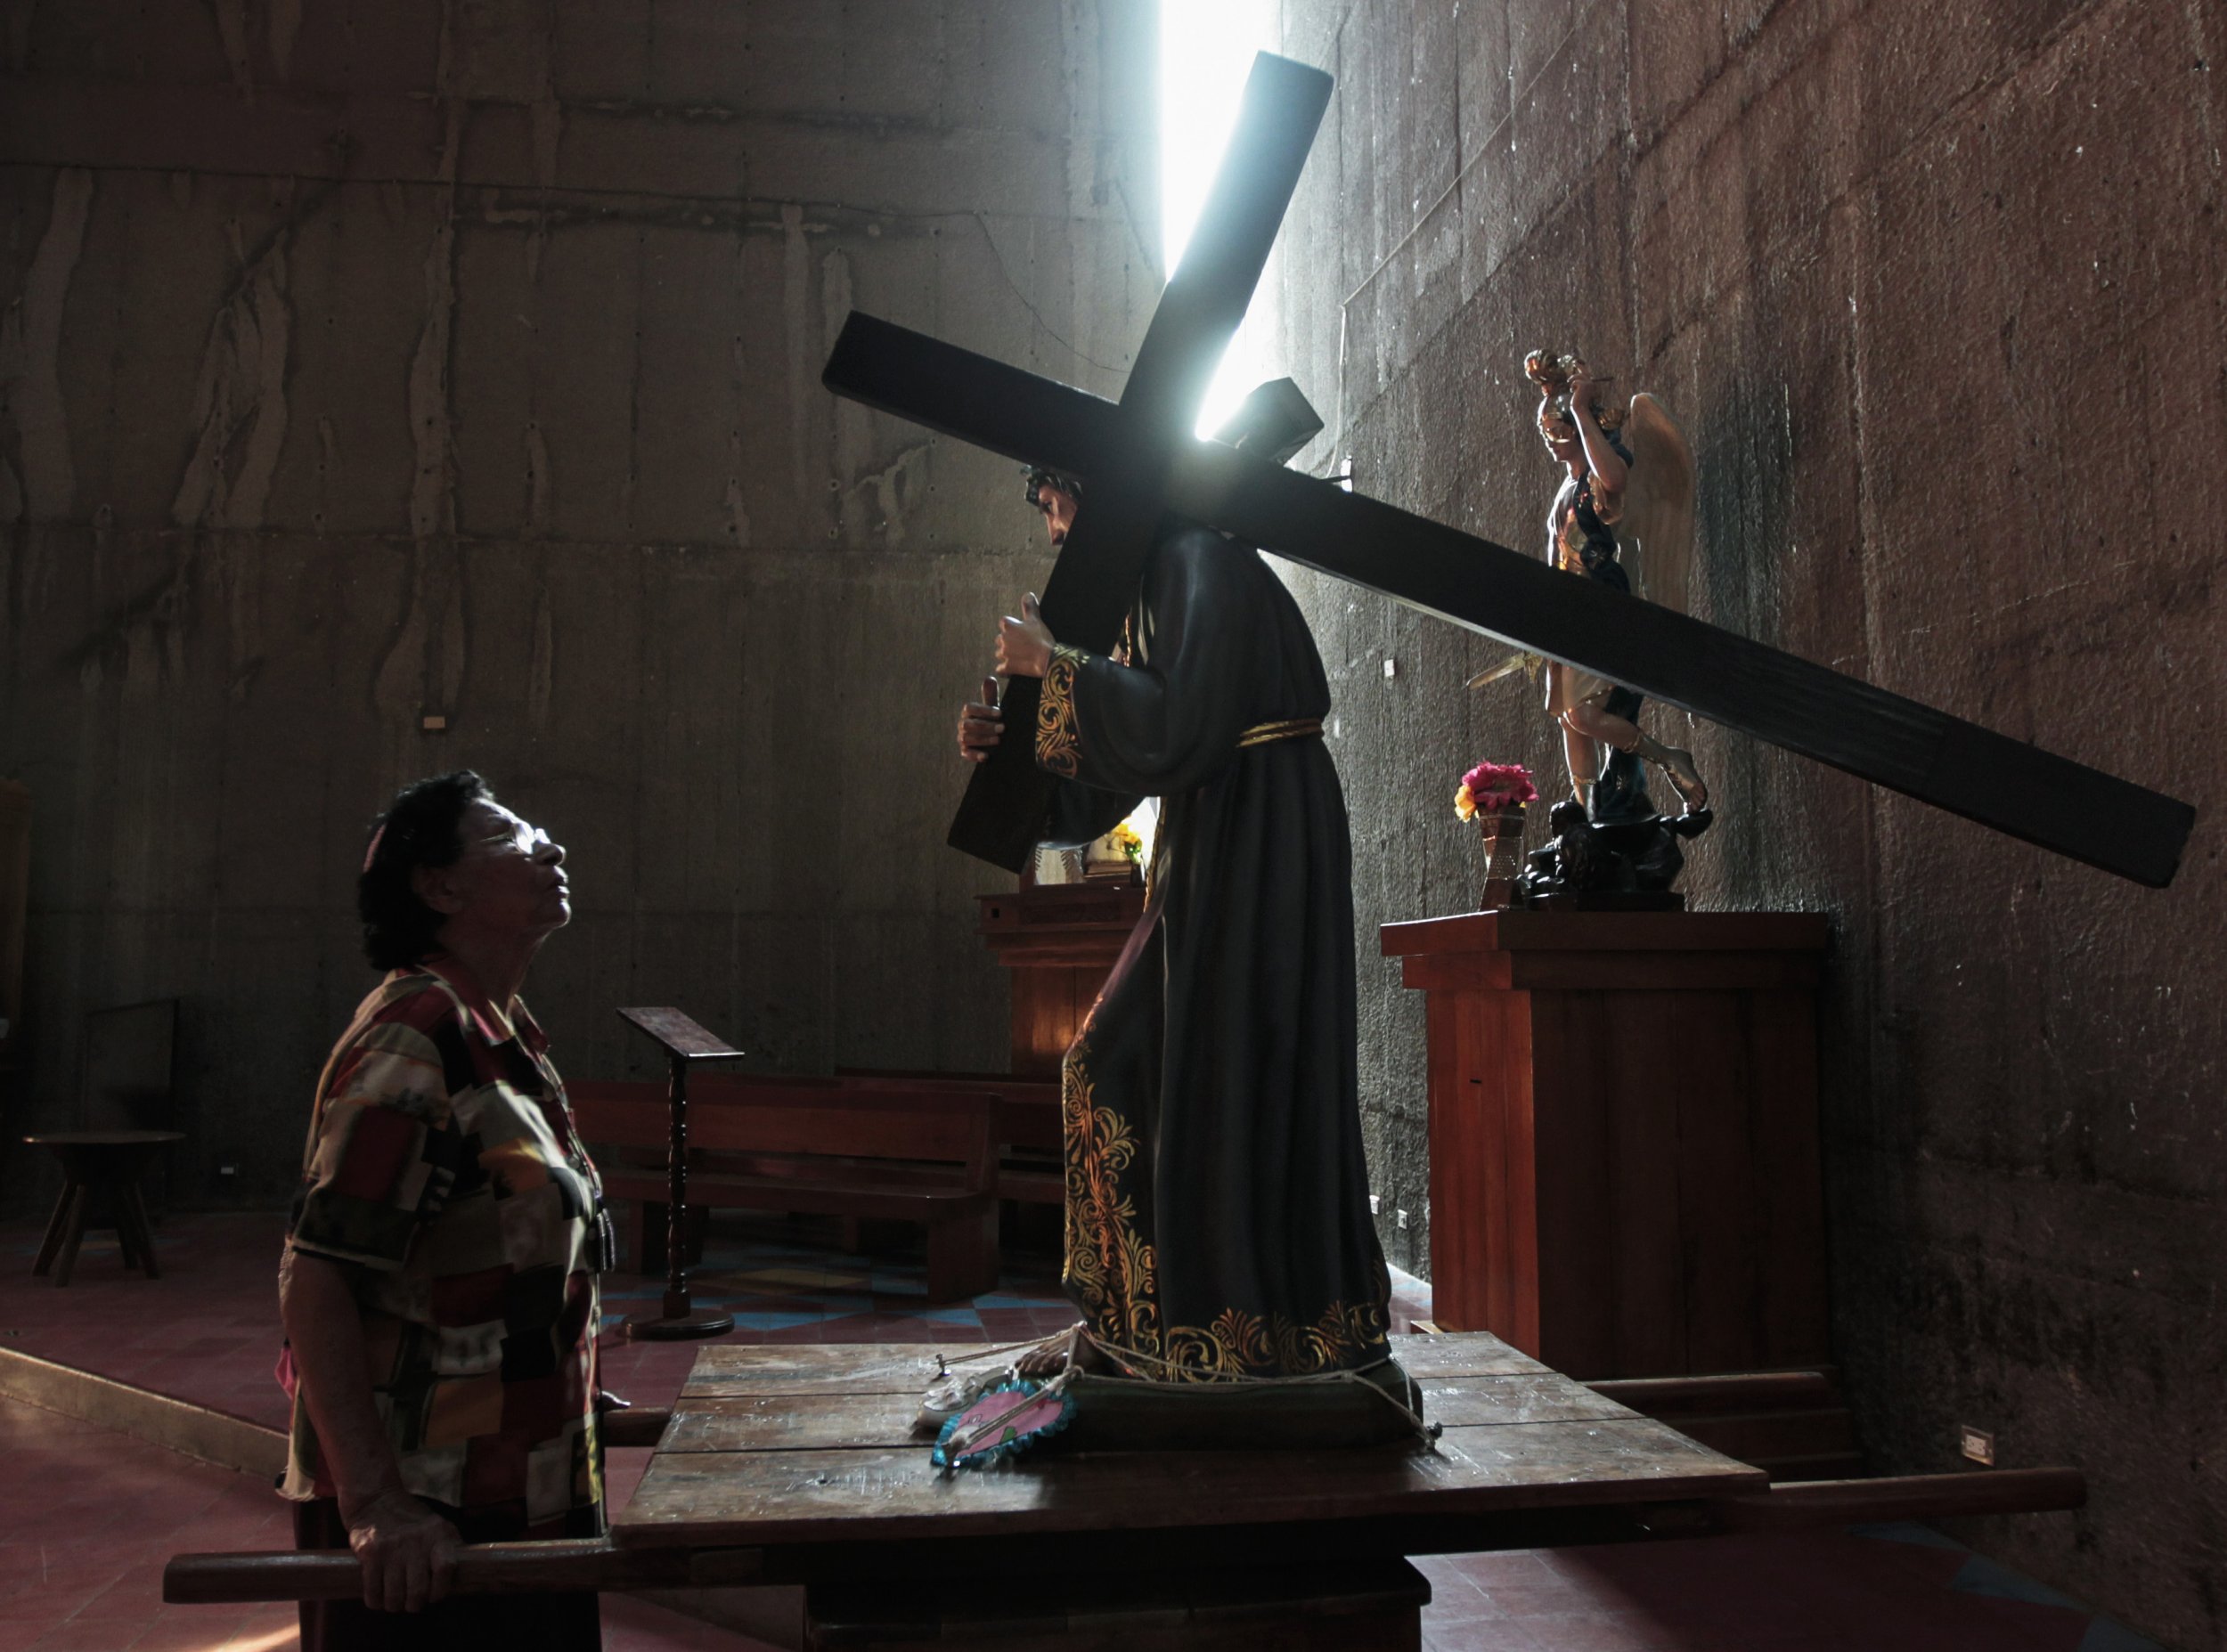 jesus on cross with sword inside